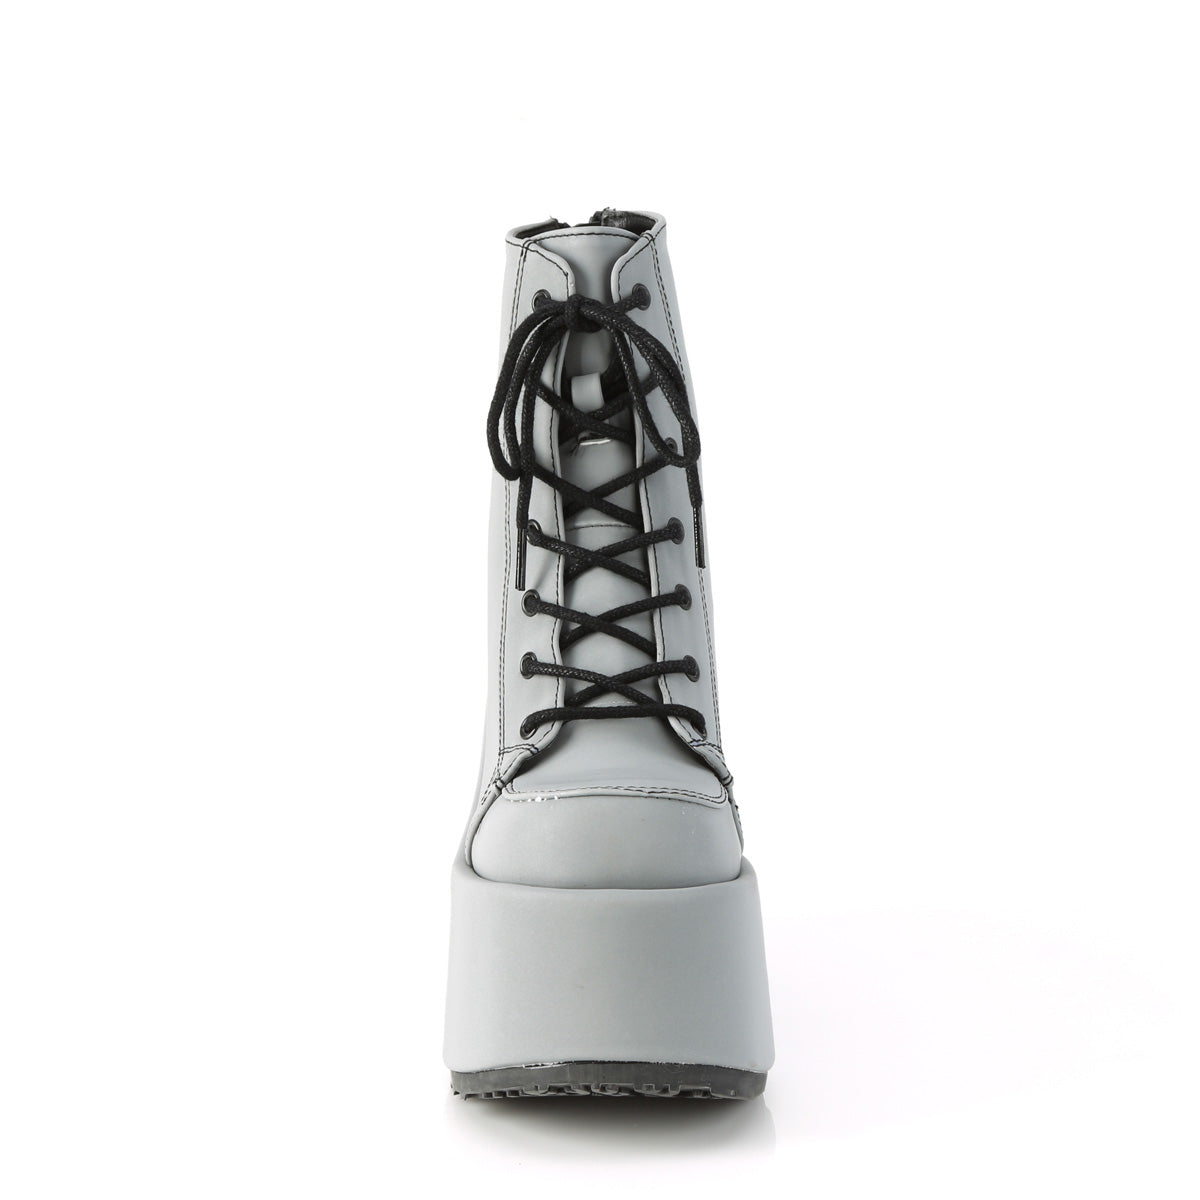 CAMEL-203 DemoniaCult Alternative Footwear Grey Reflective Ankle Boots